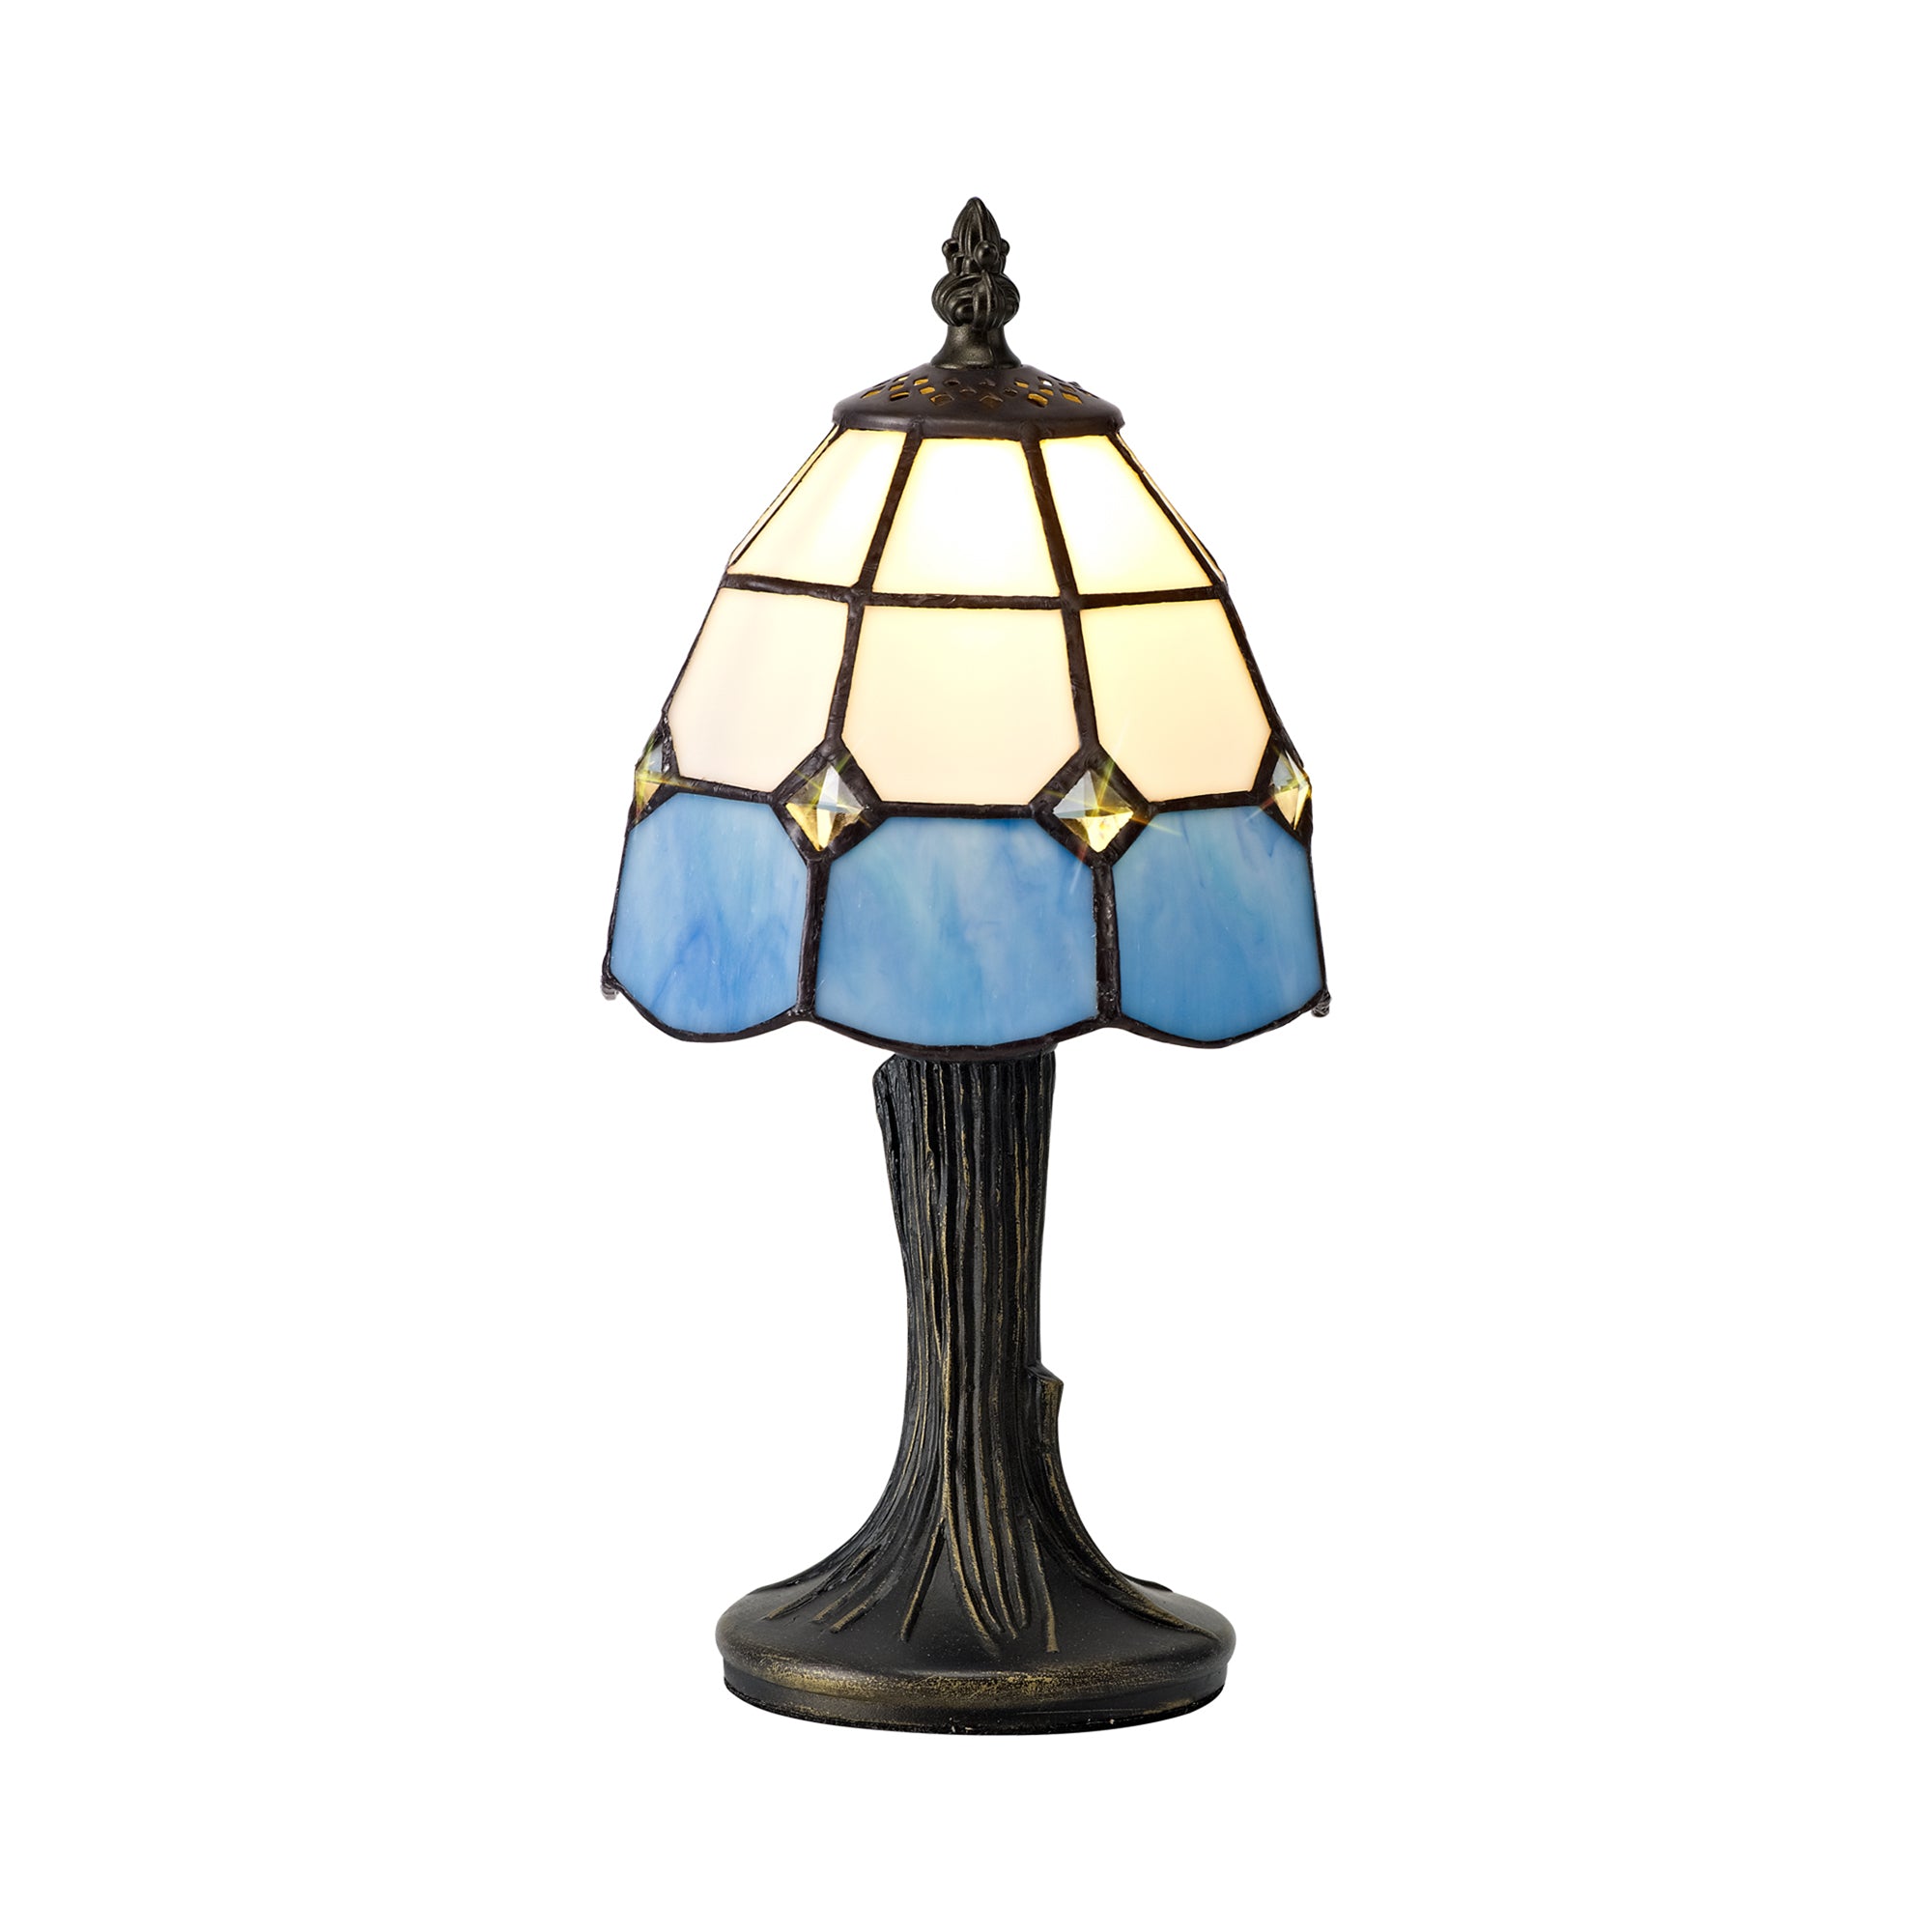 Vinceta Tiffany Table Lamp, 1 x E14, White/Blue/Clear Crystal Shade